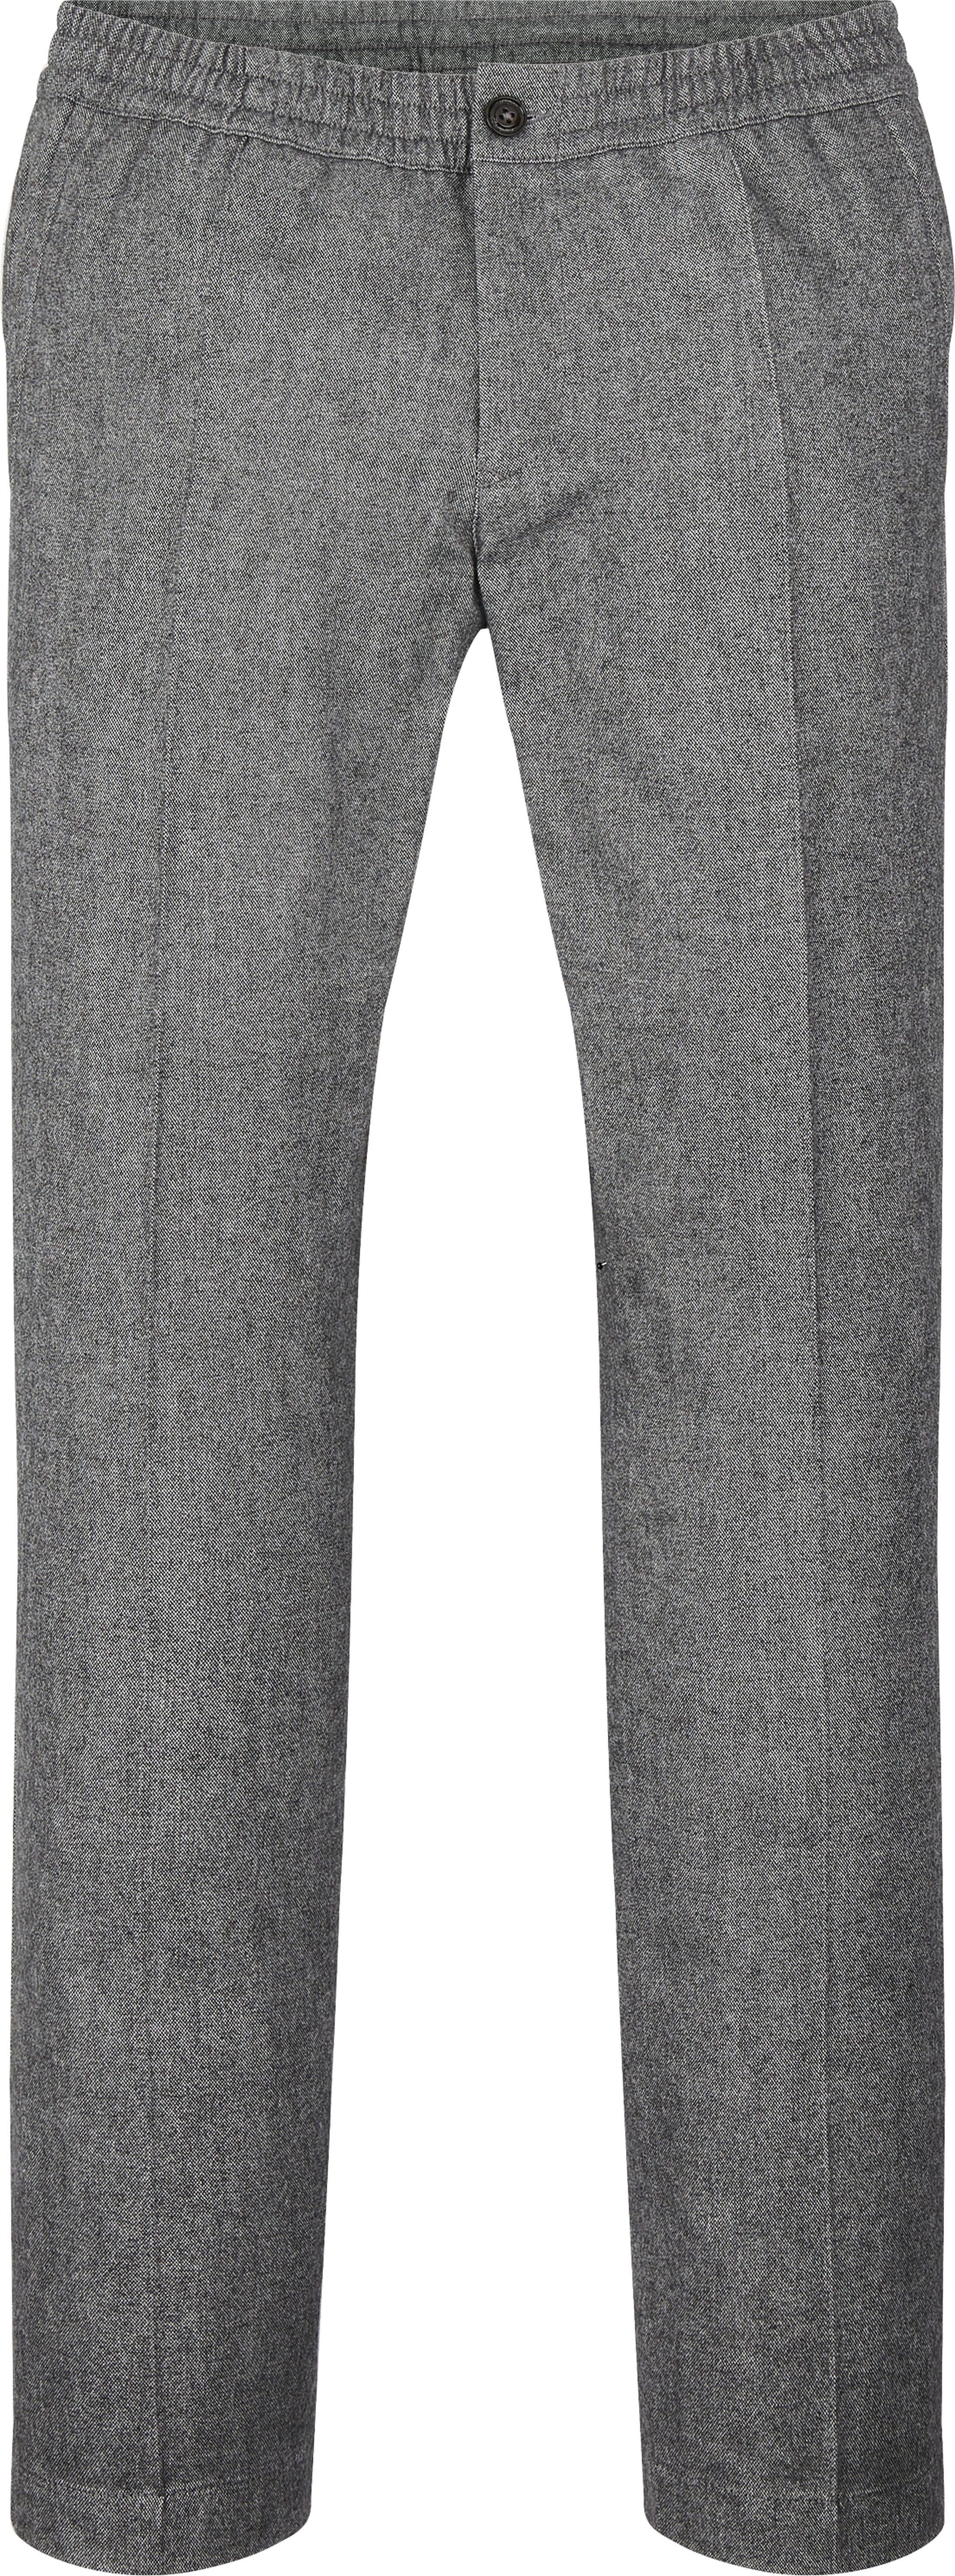 Tommy Hilfiger Active Pants Dark Grey Grey size L